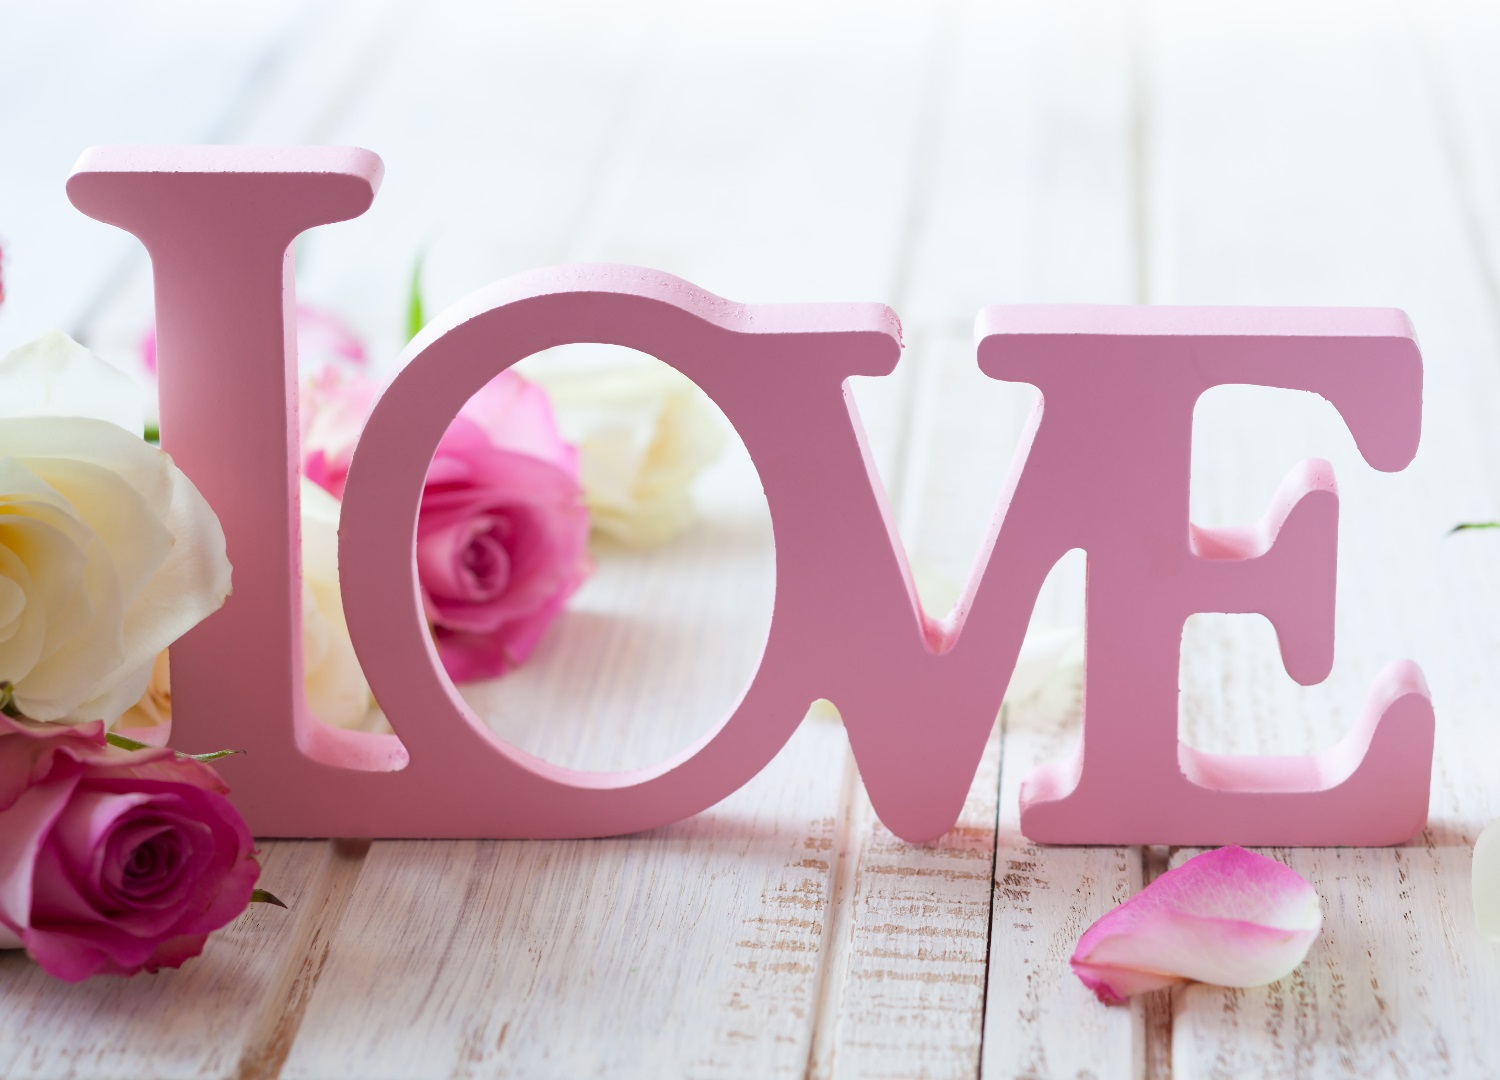 Letras de decoración de amor con concepto de día de San Valentín cortadas con láser